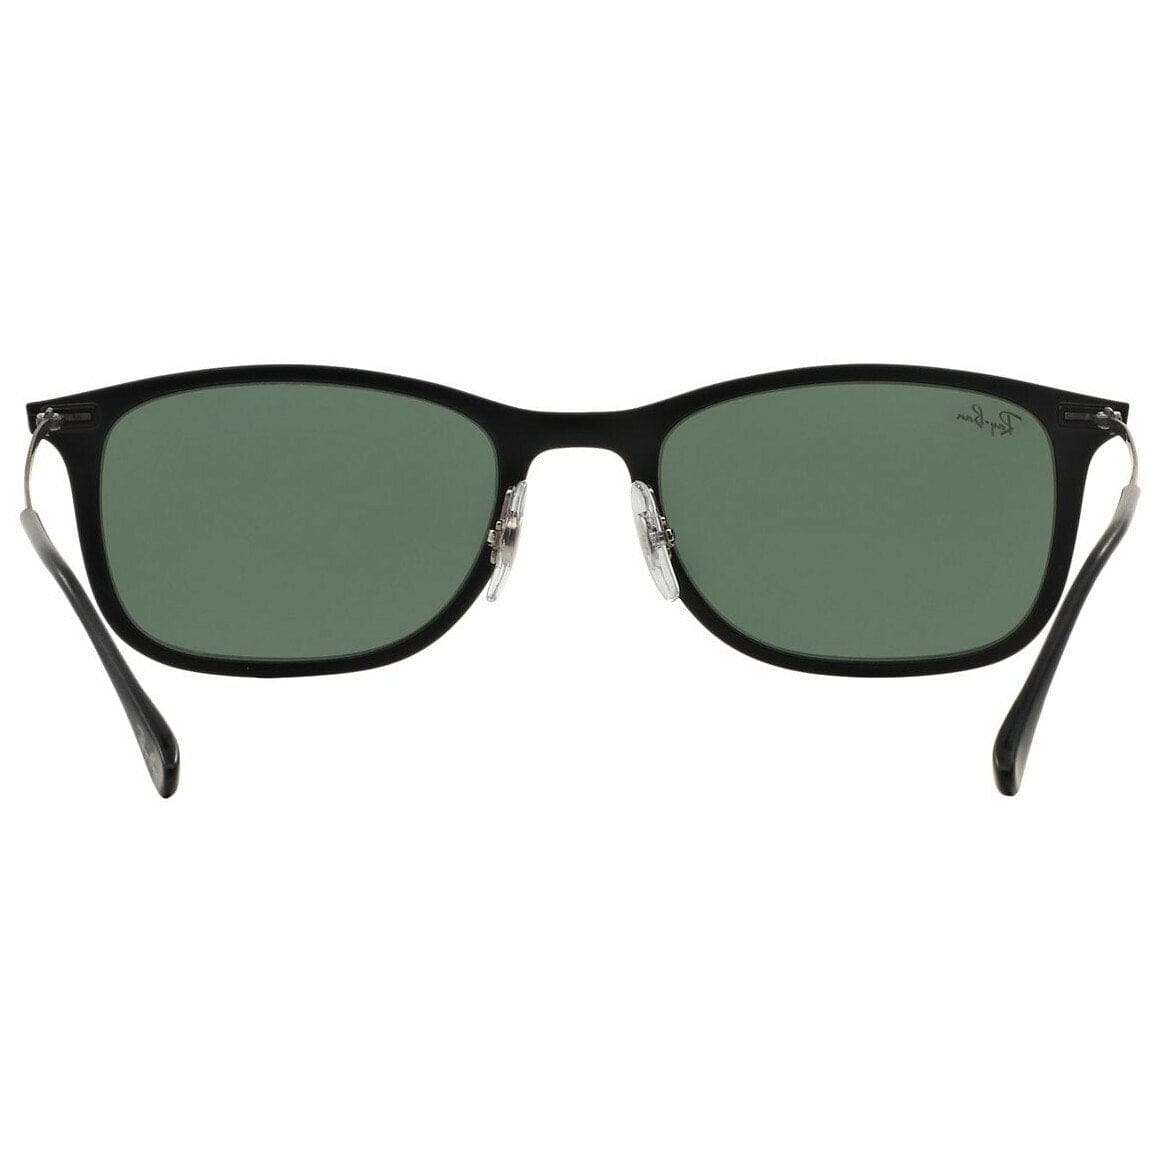 Ray-Ban RB4225 601S71 New Wayfarer Light Ray Sunglasses Black Frame Green Classic Lens